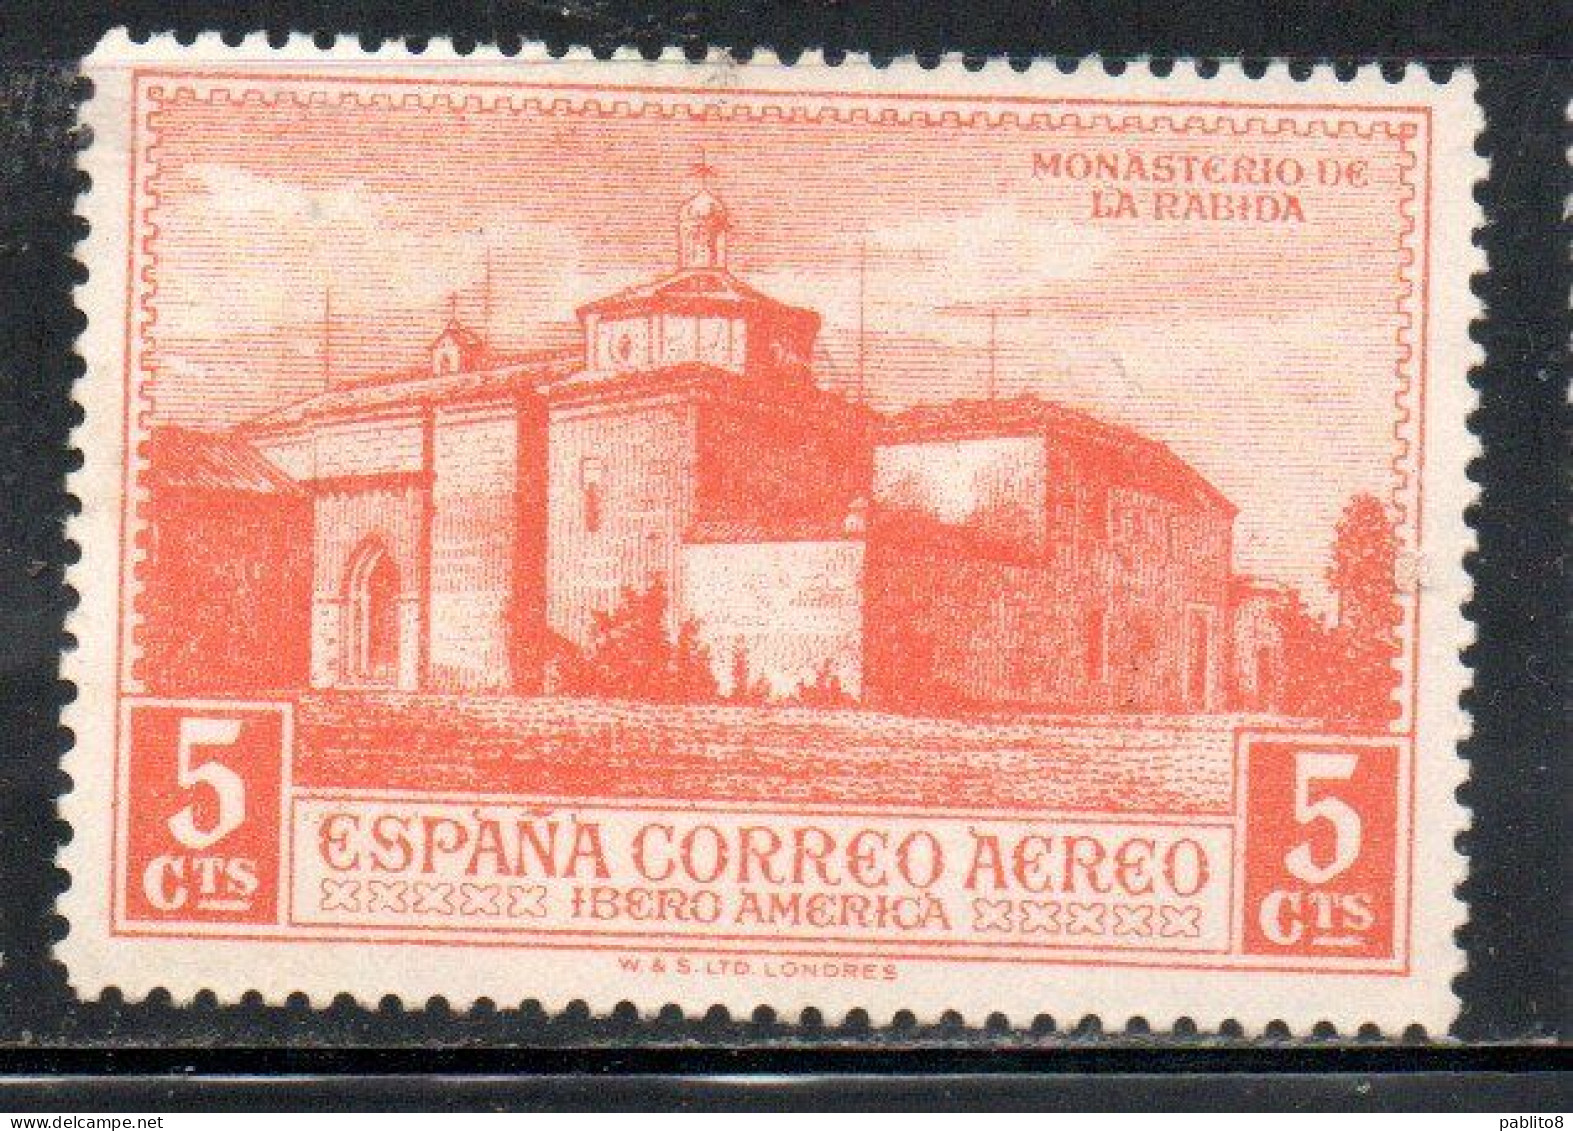 SPAIN ESPAÑA SPAGNA 1930 AIR POST MAIL AIRMAIL CHRISTOPHER COLUMBUS ISSUE LA RABYDA MONASTER  5c MLH - Nuevos